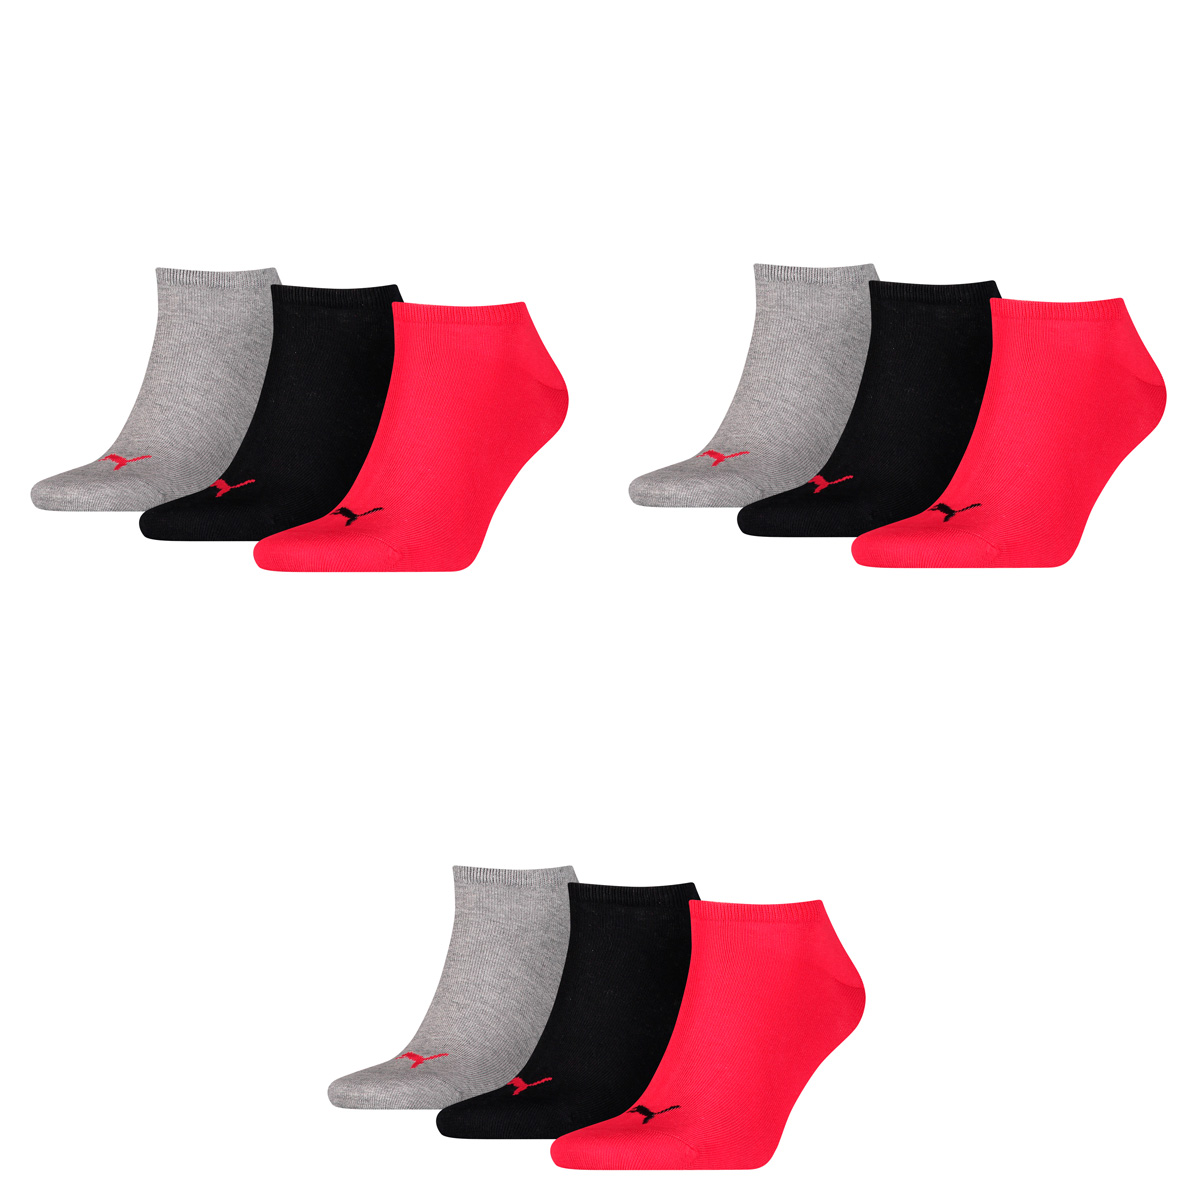 Puma unisex Sneaker Socken Kurzsocken Sportsocken 261080001 12 Paar, Farbe:Mehrfarbig, Menge:12 Paar (4 x 3er Pack), Größe:47-49, Artikel:-232 black/red